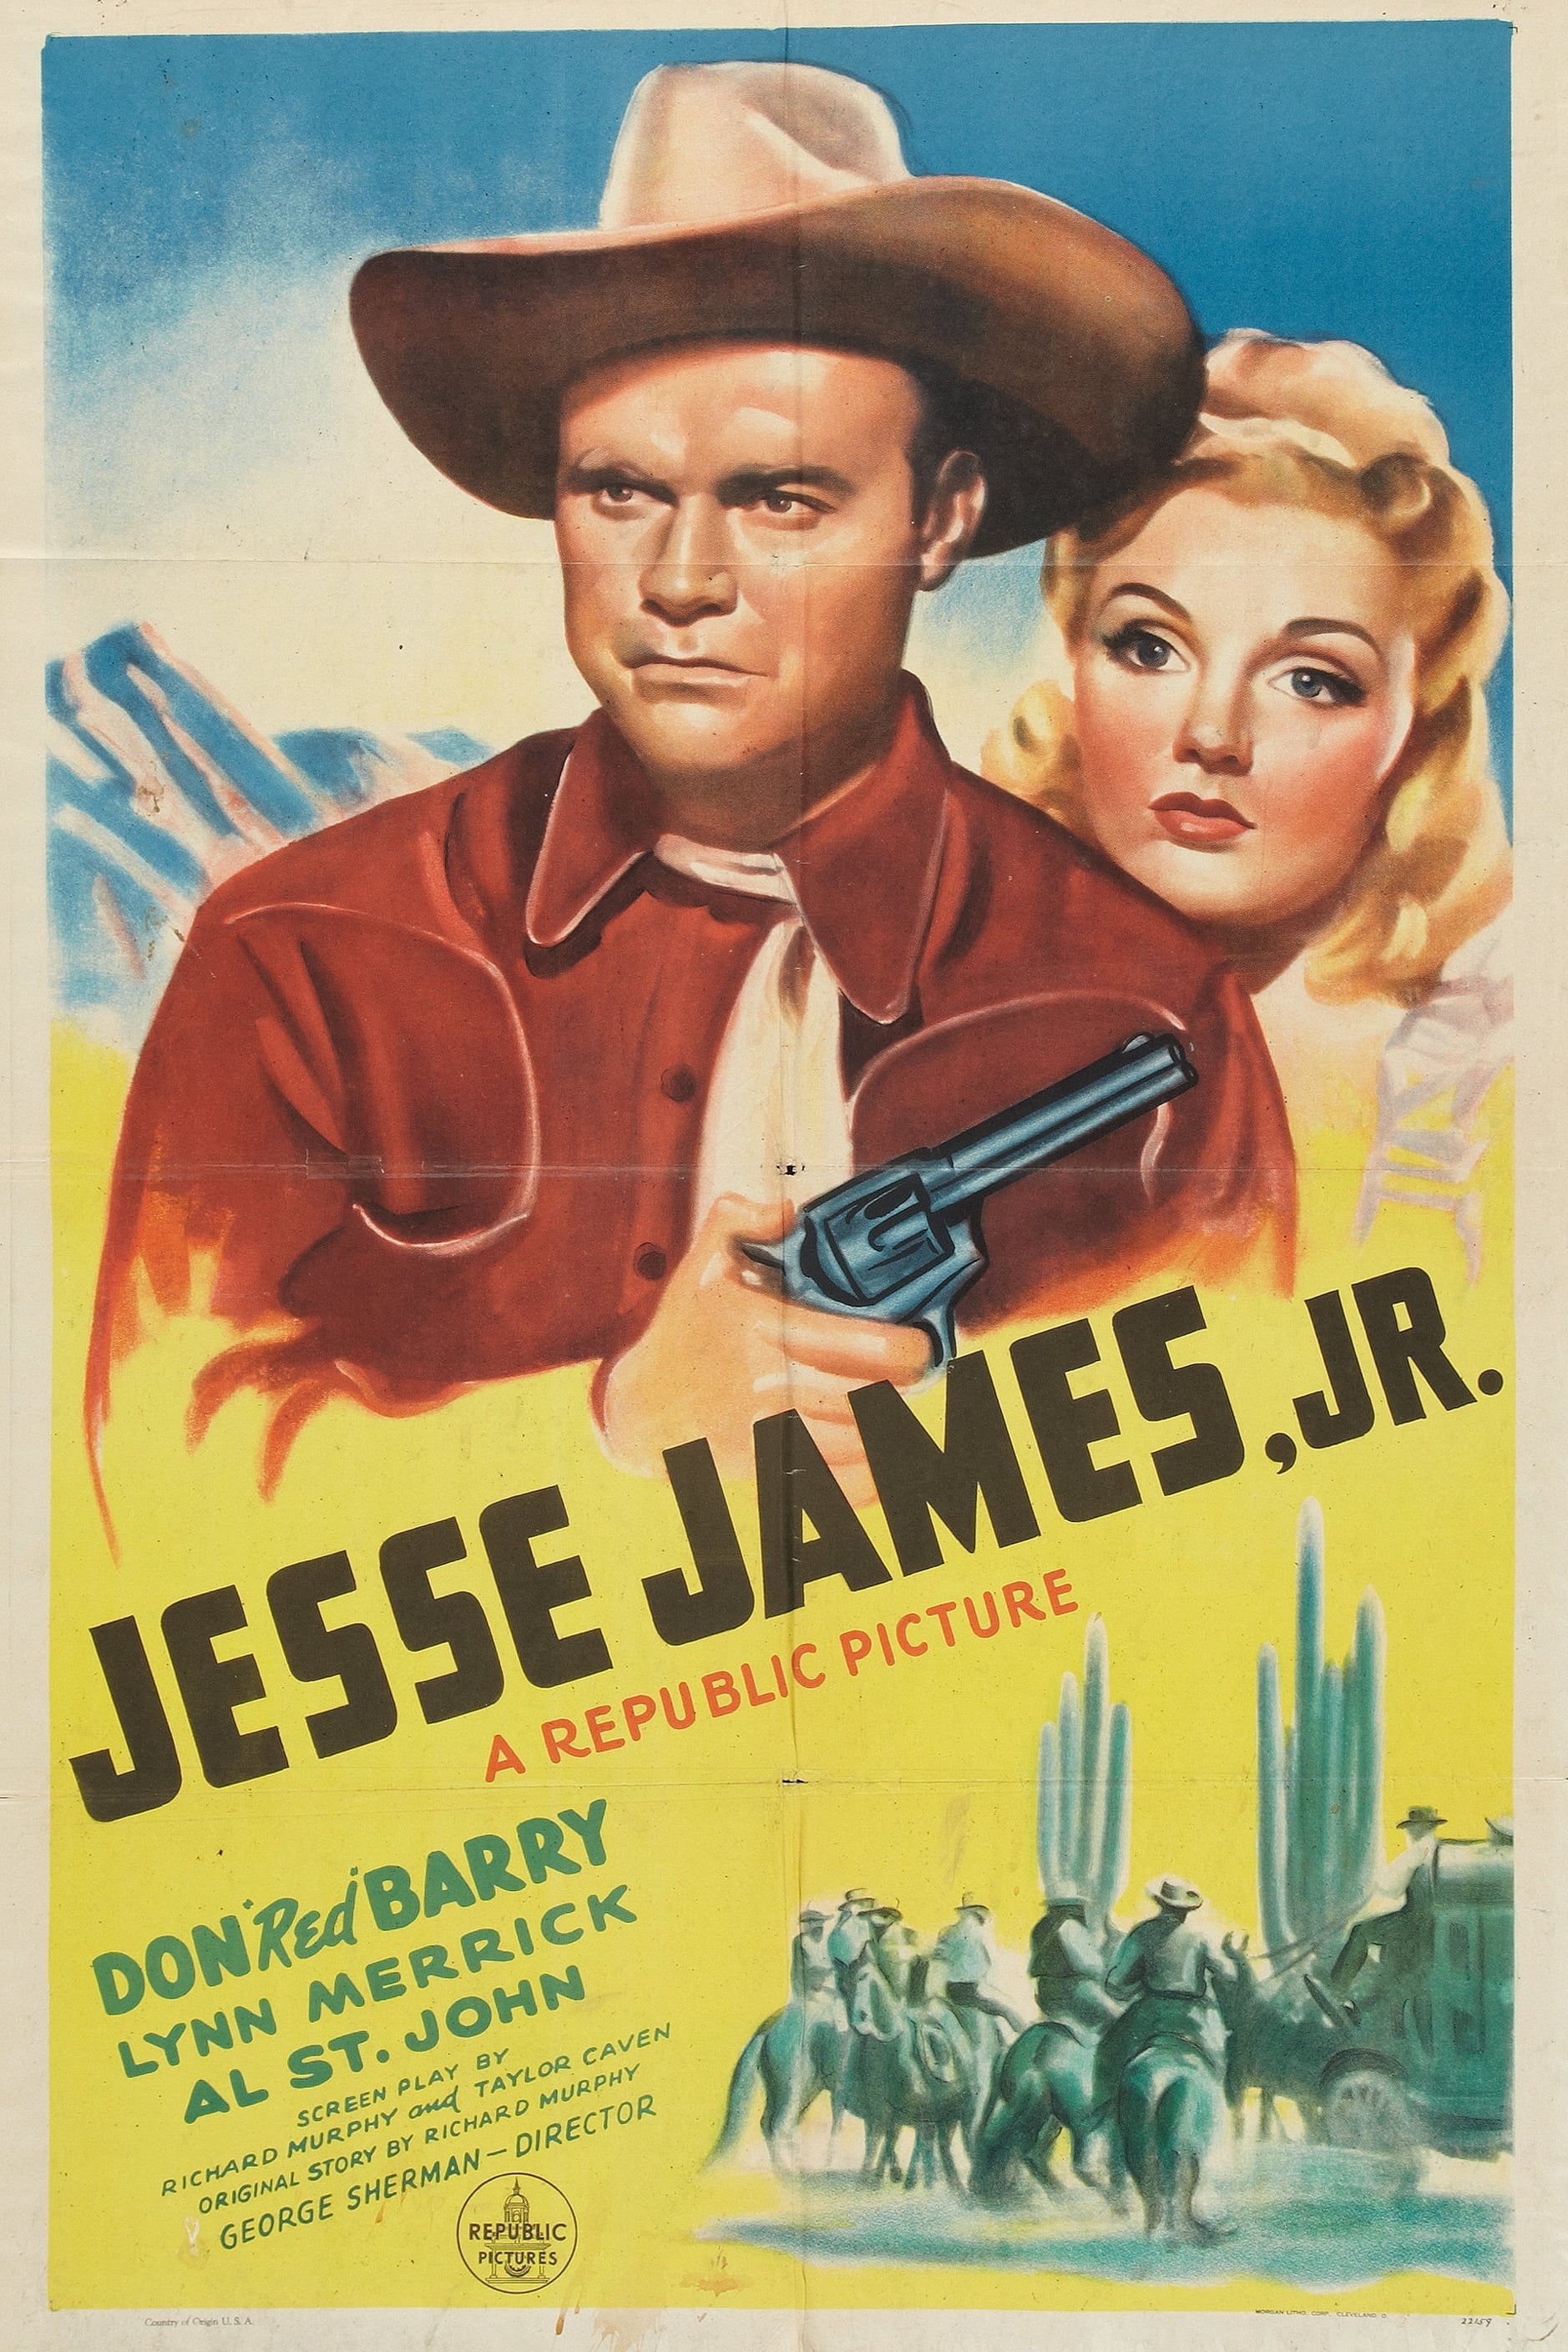 Jesse James, Jr. (1942)